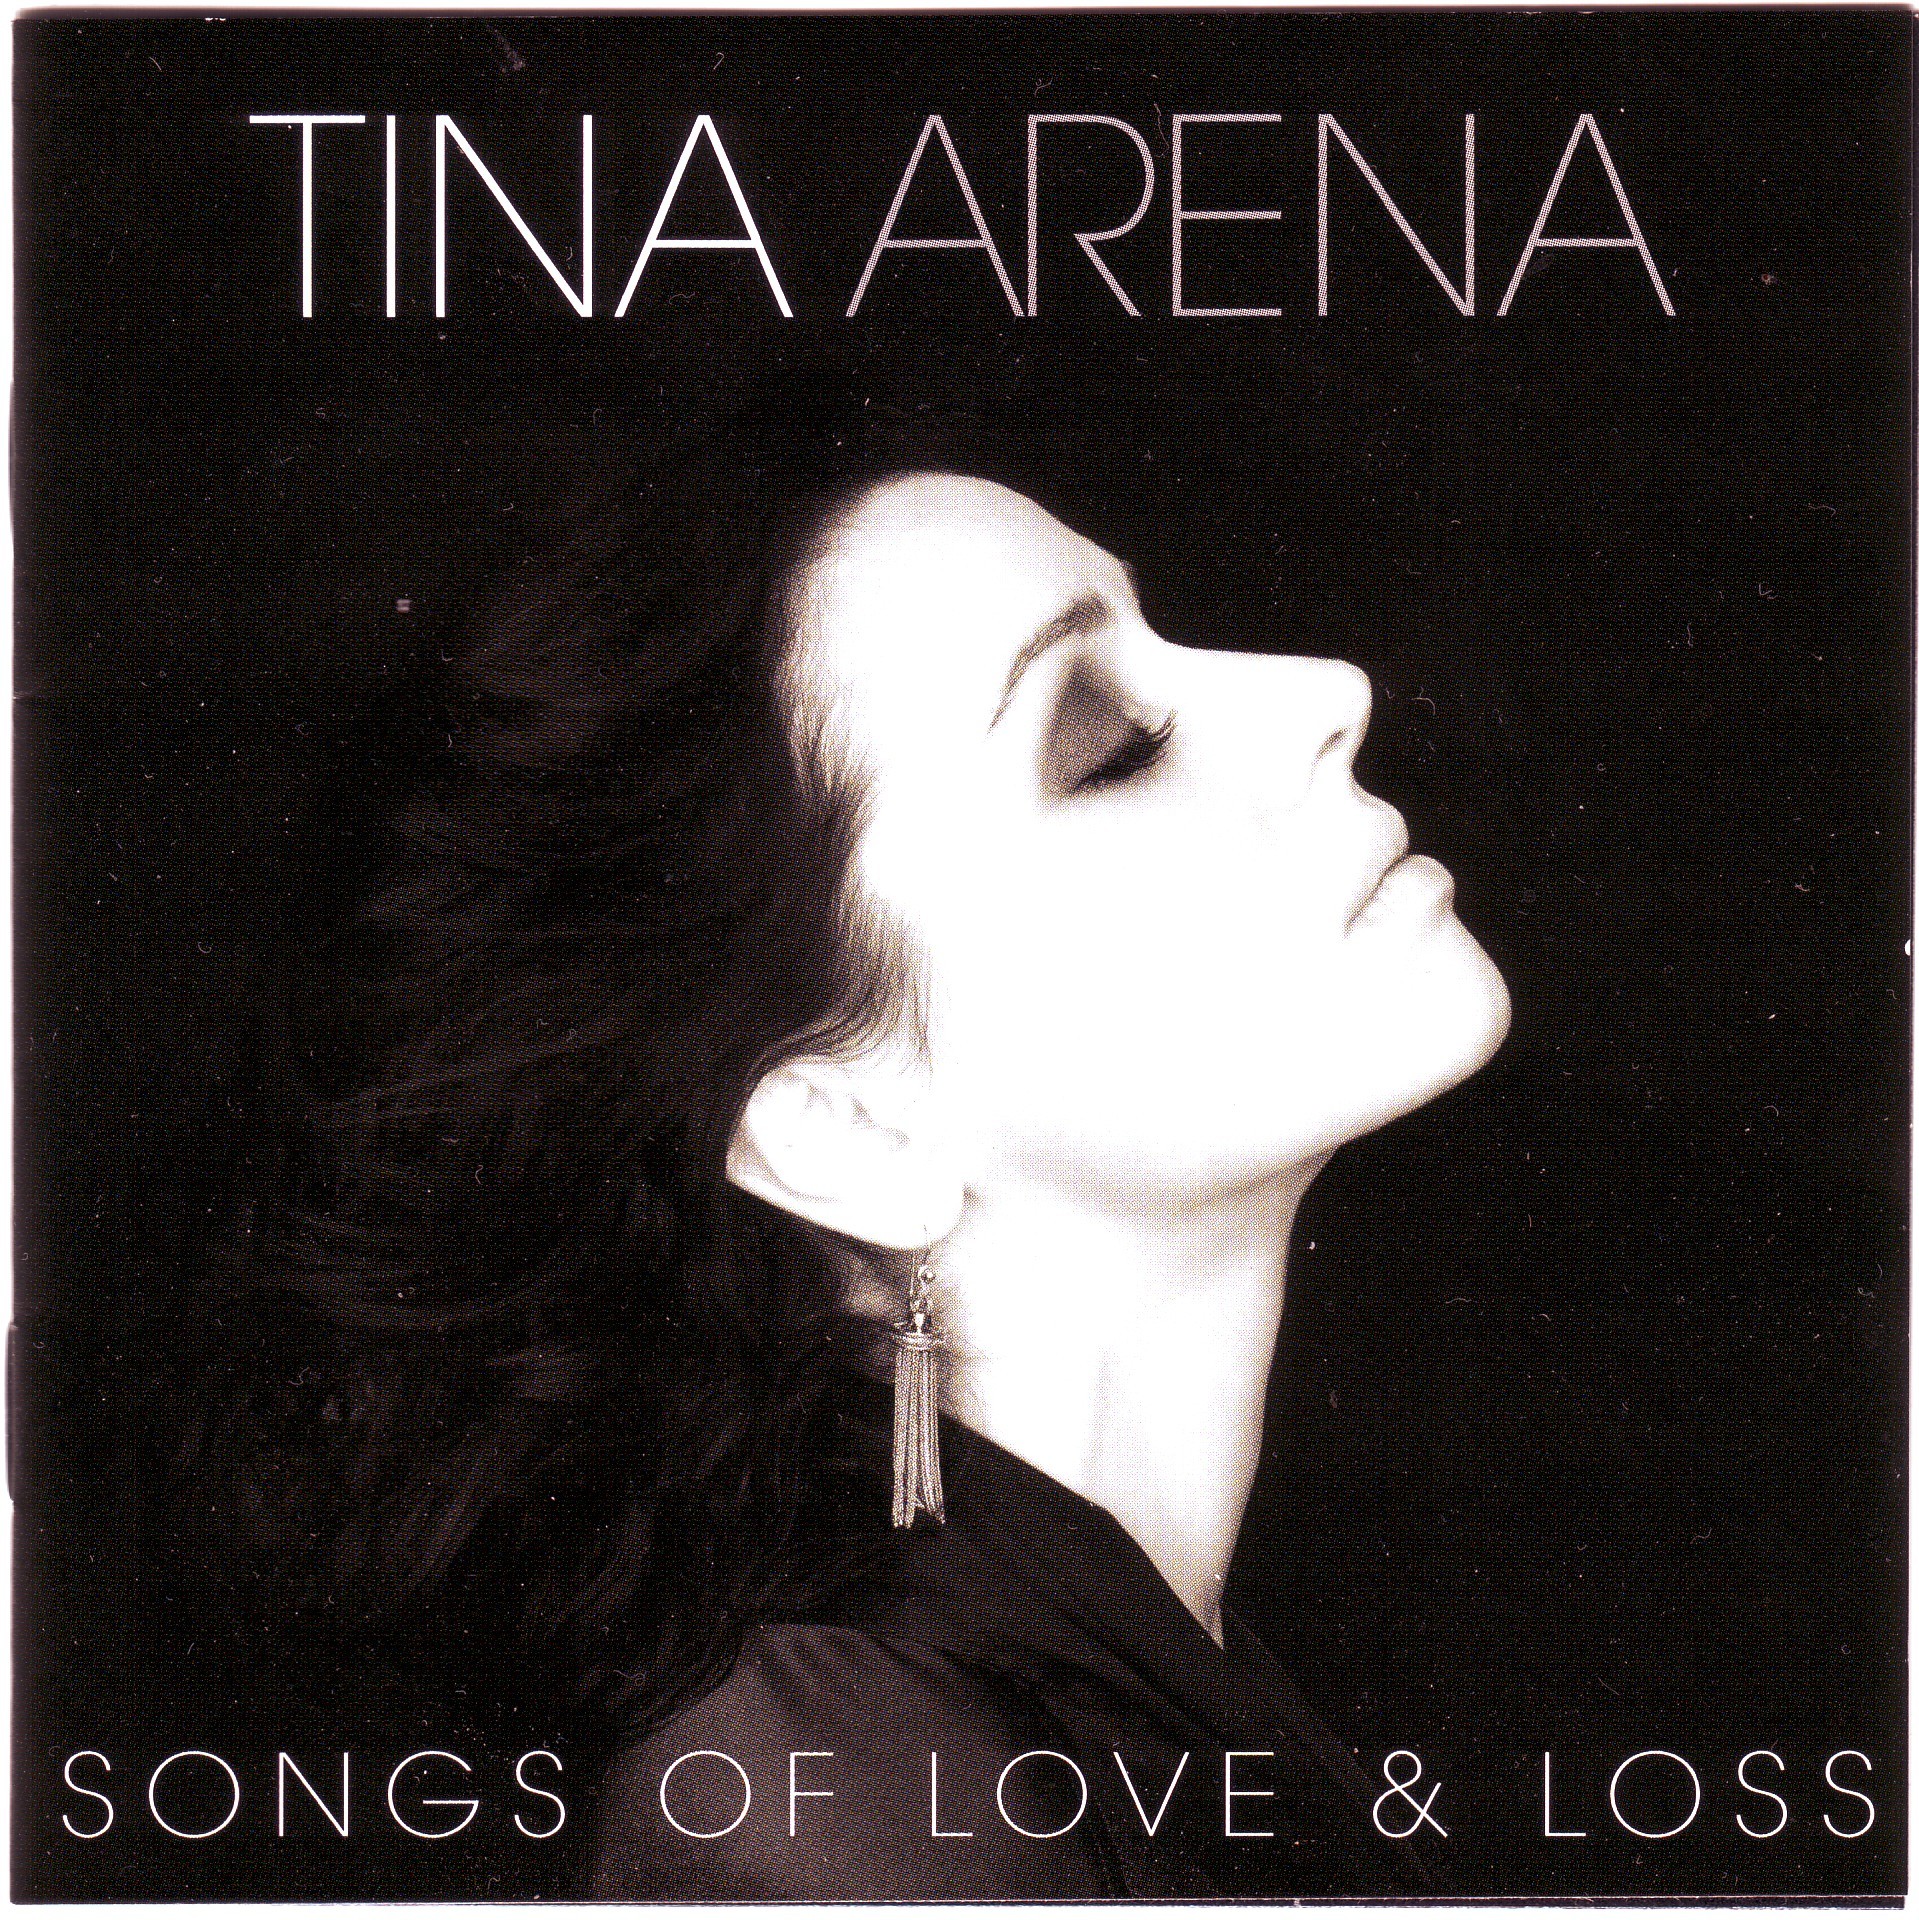 Songs of Love  Loss  2007 - tina_arena_songs_of_love_loss_2007_retail_cd-front.jpg